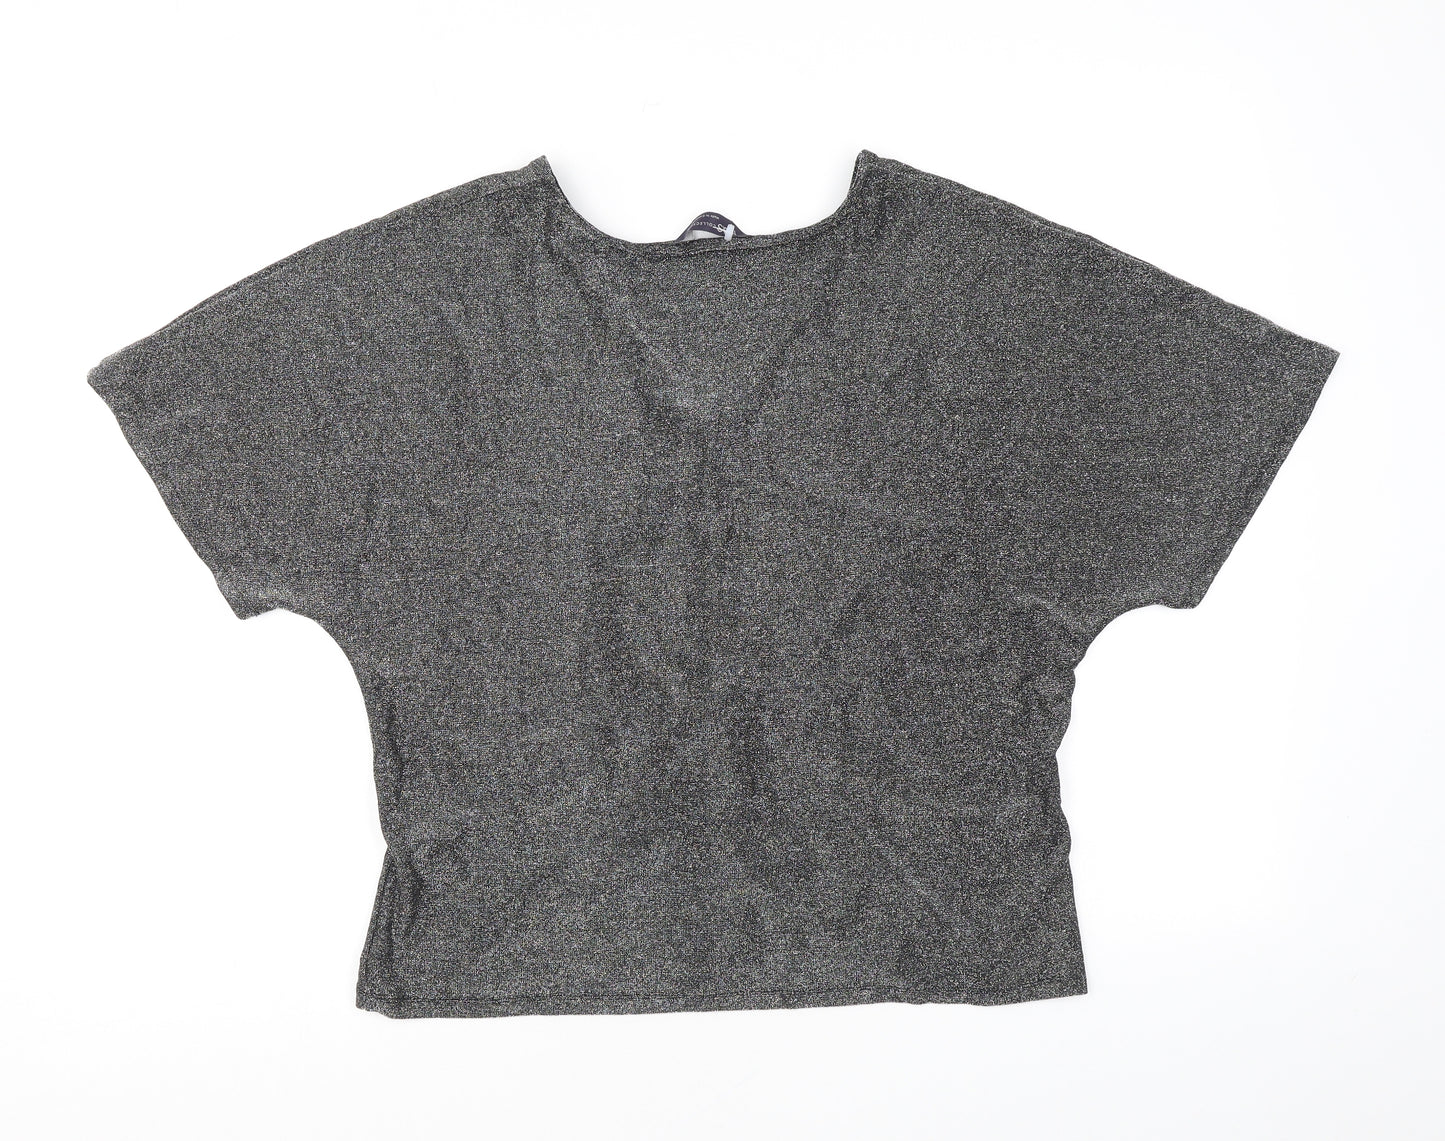 Marks and Spencer Womens Silver Polyamide Basic T-Shirt Size L V-Neck - Twist Detail